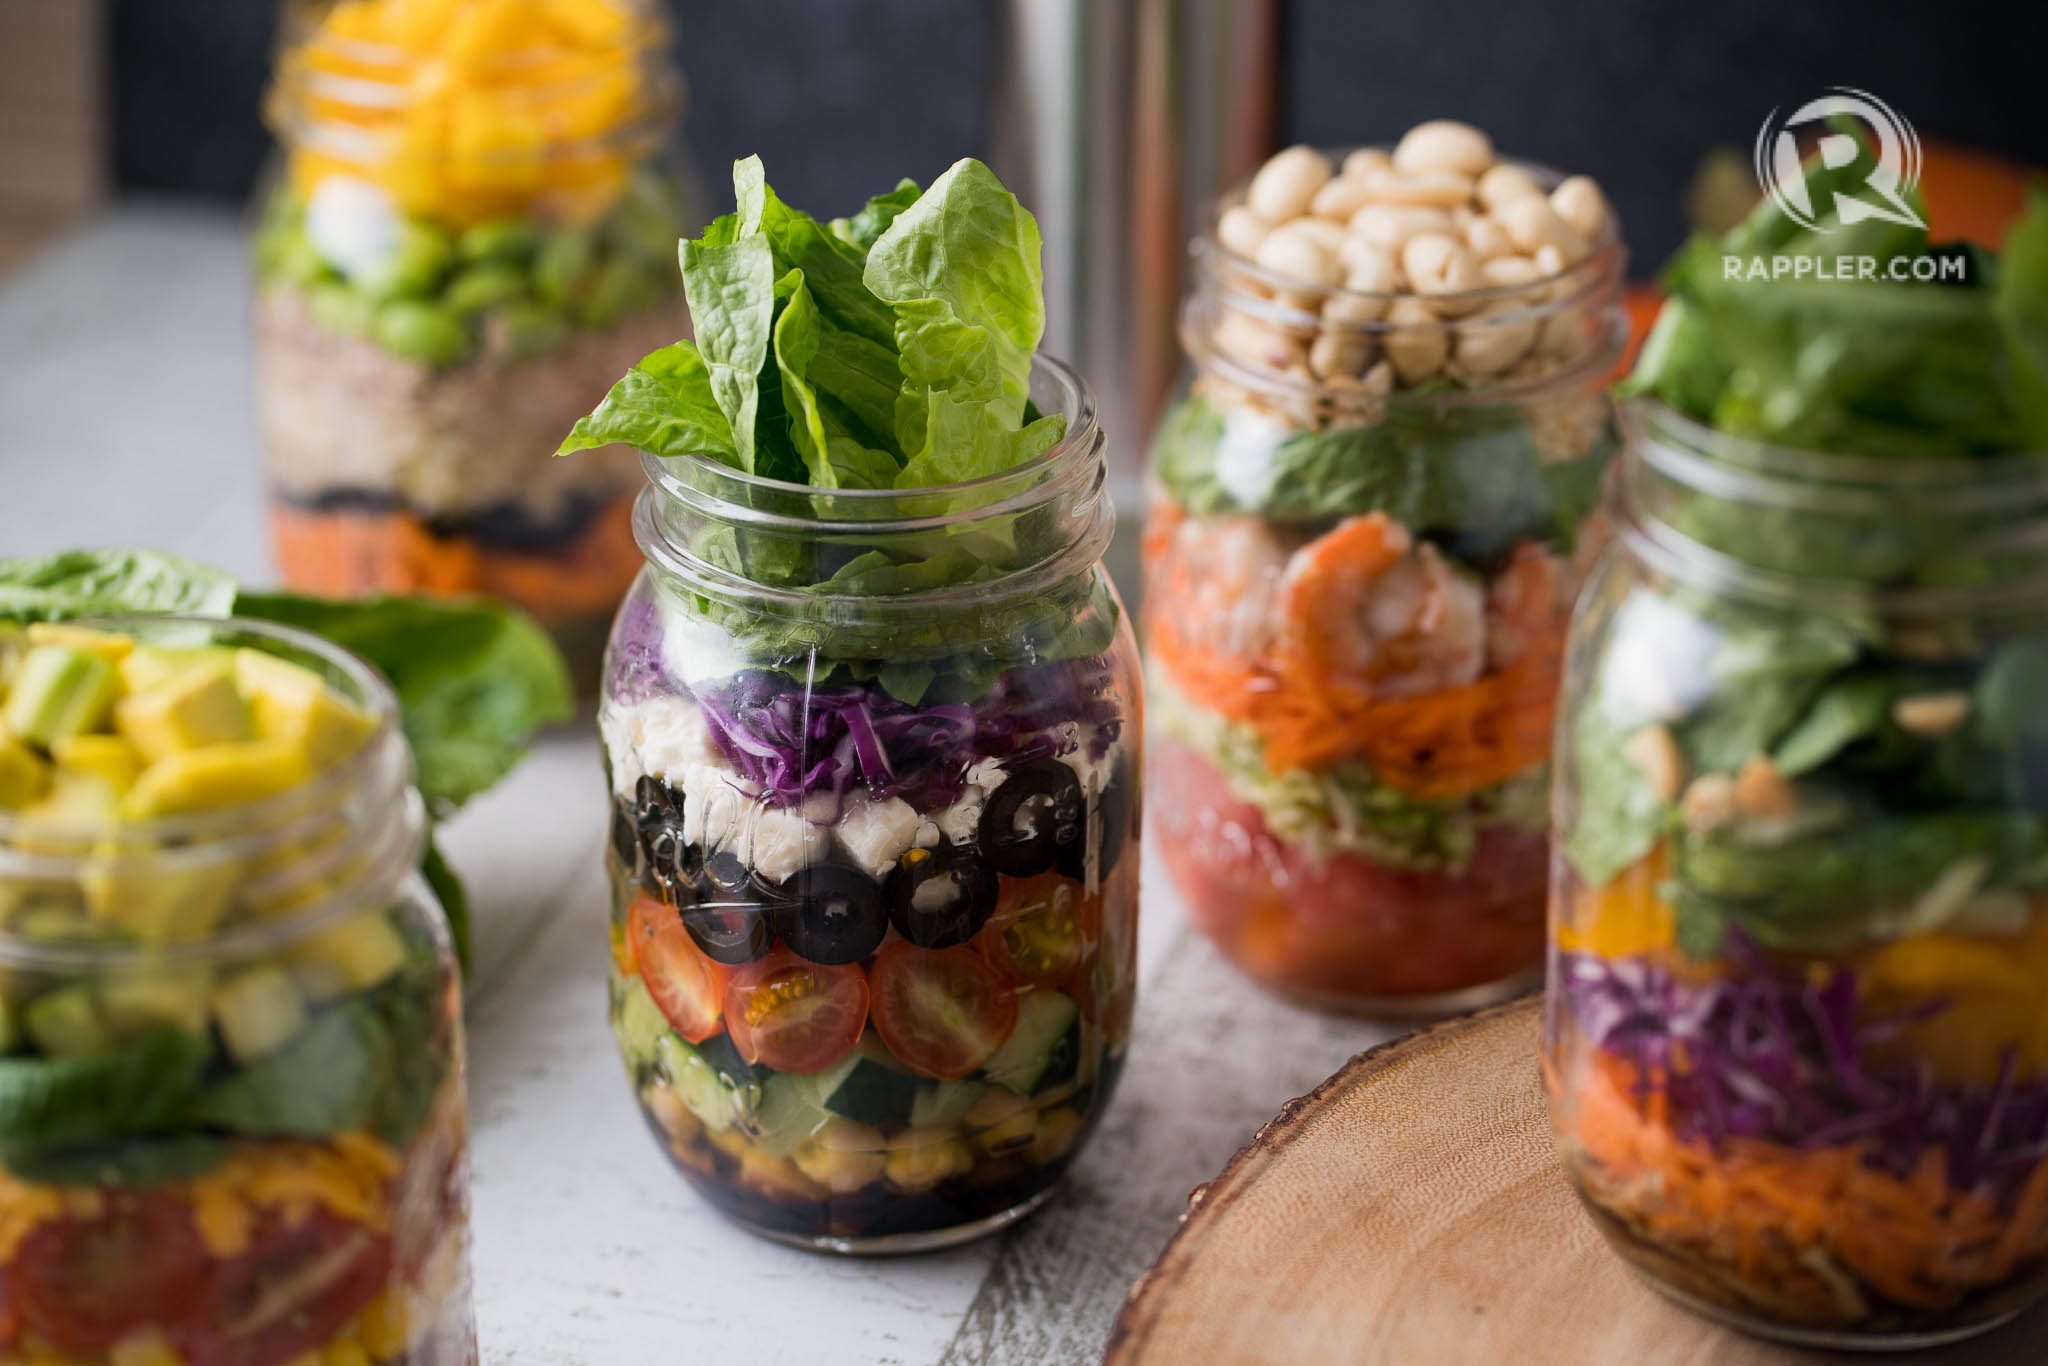 Thai Salad in a Jar - What Should I Make For